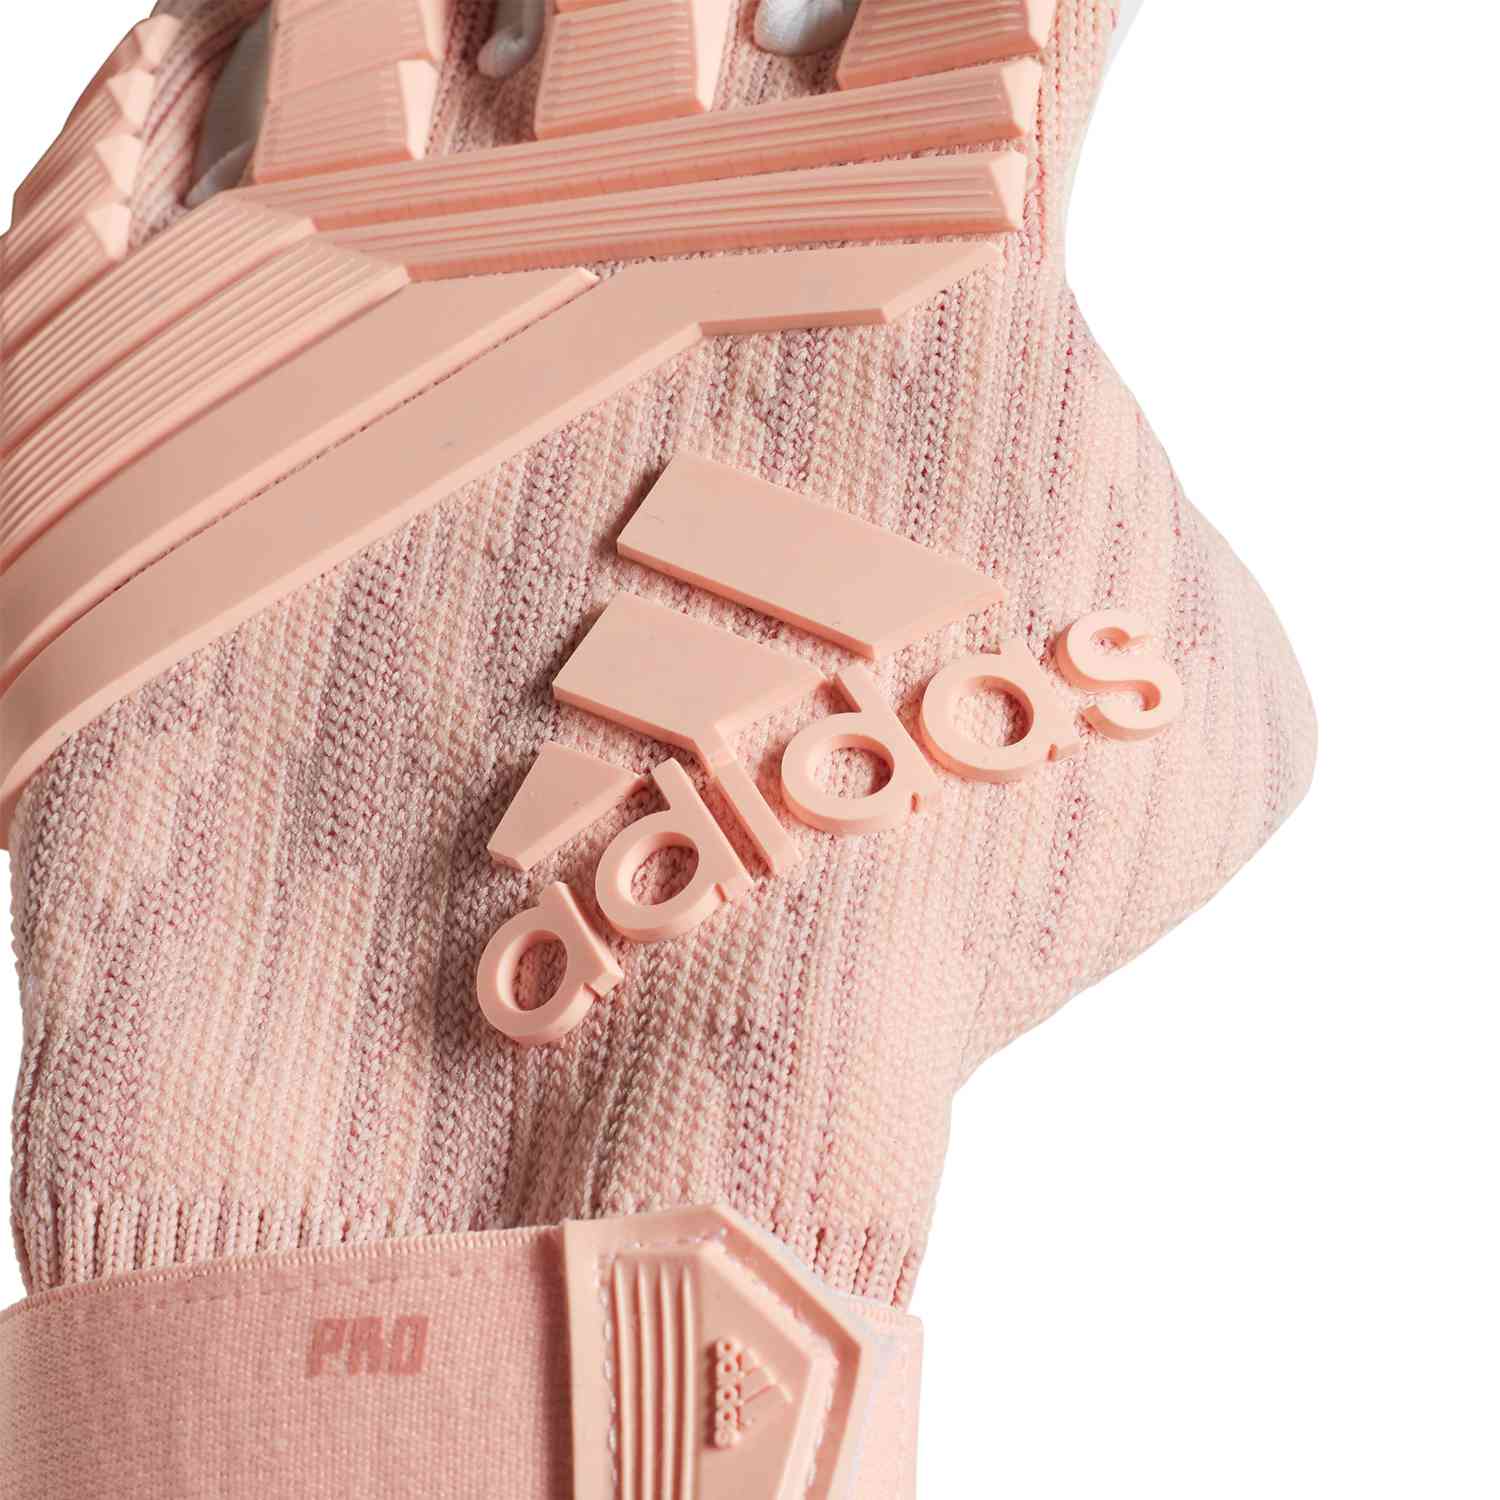 trace pink adidas